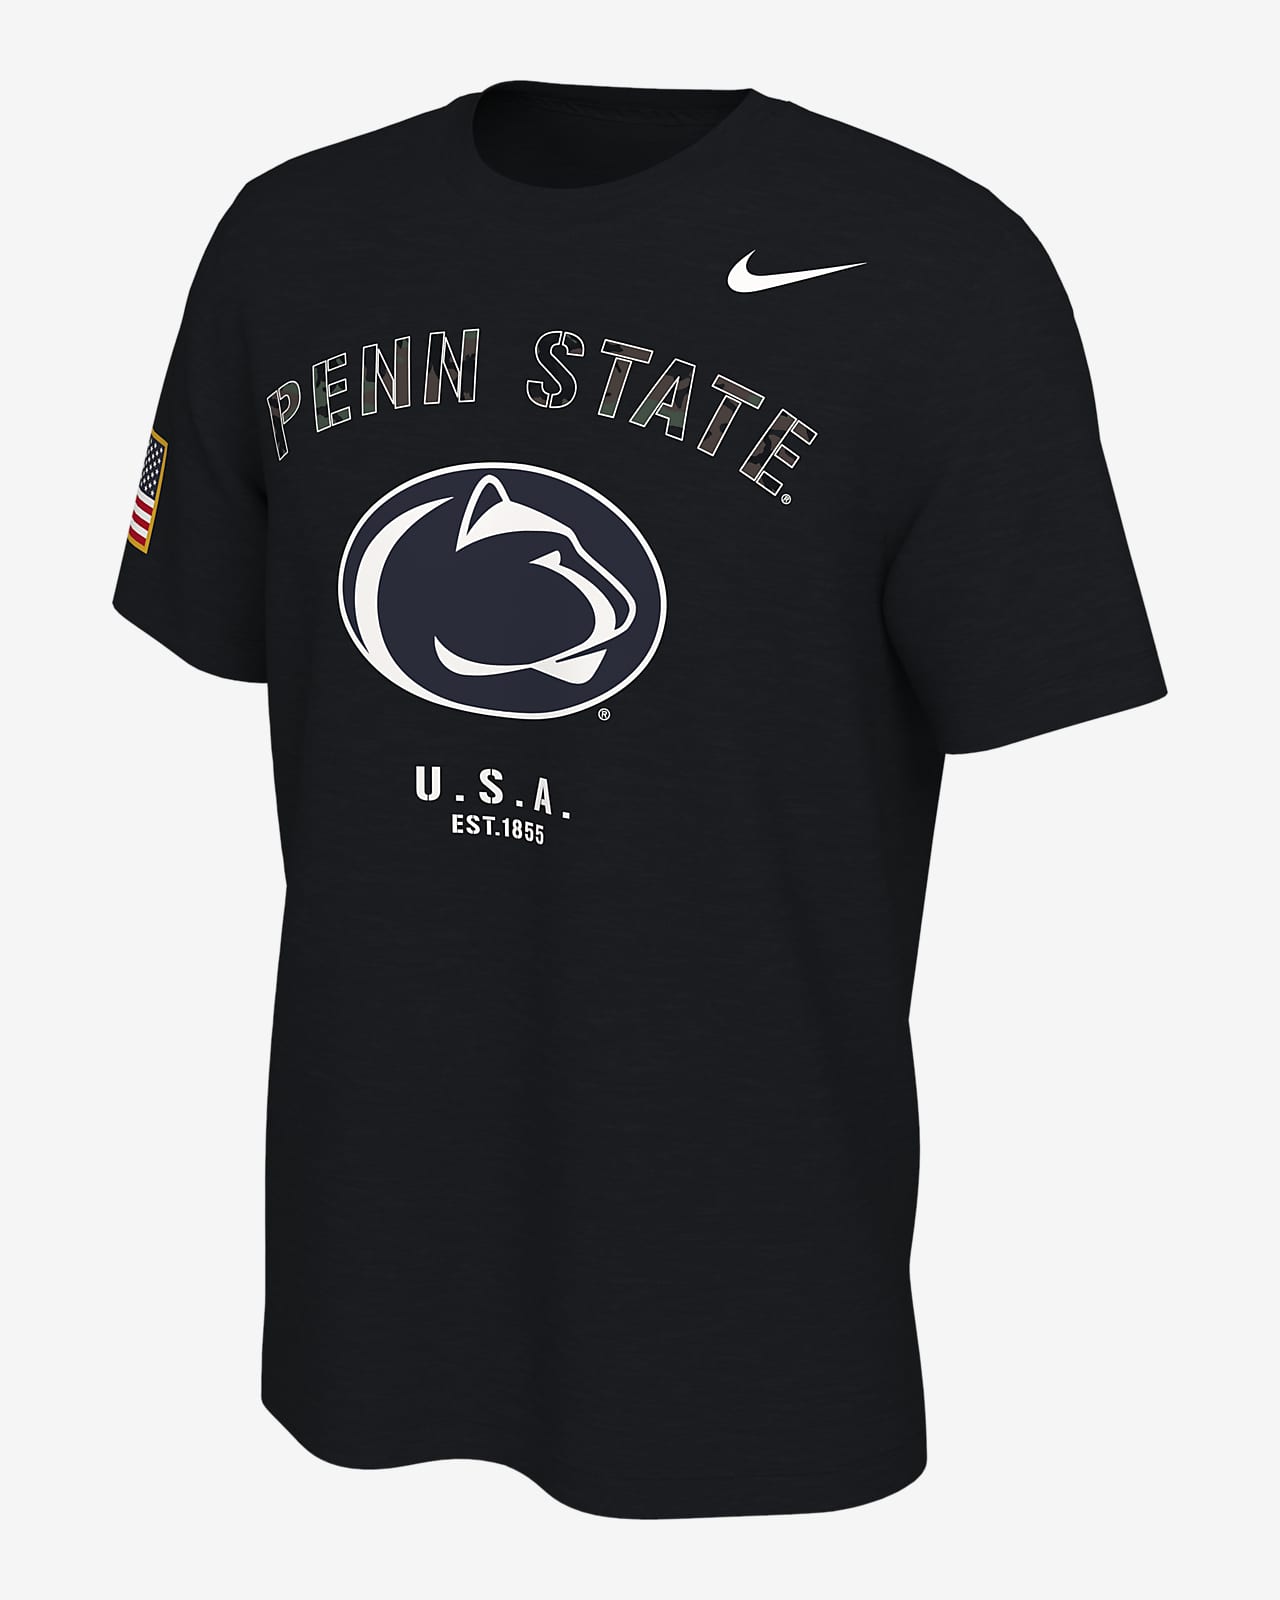 Nike College (Penn State) Men's Graphic 